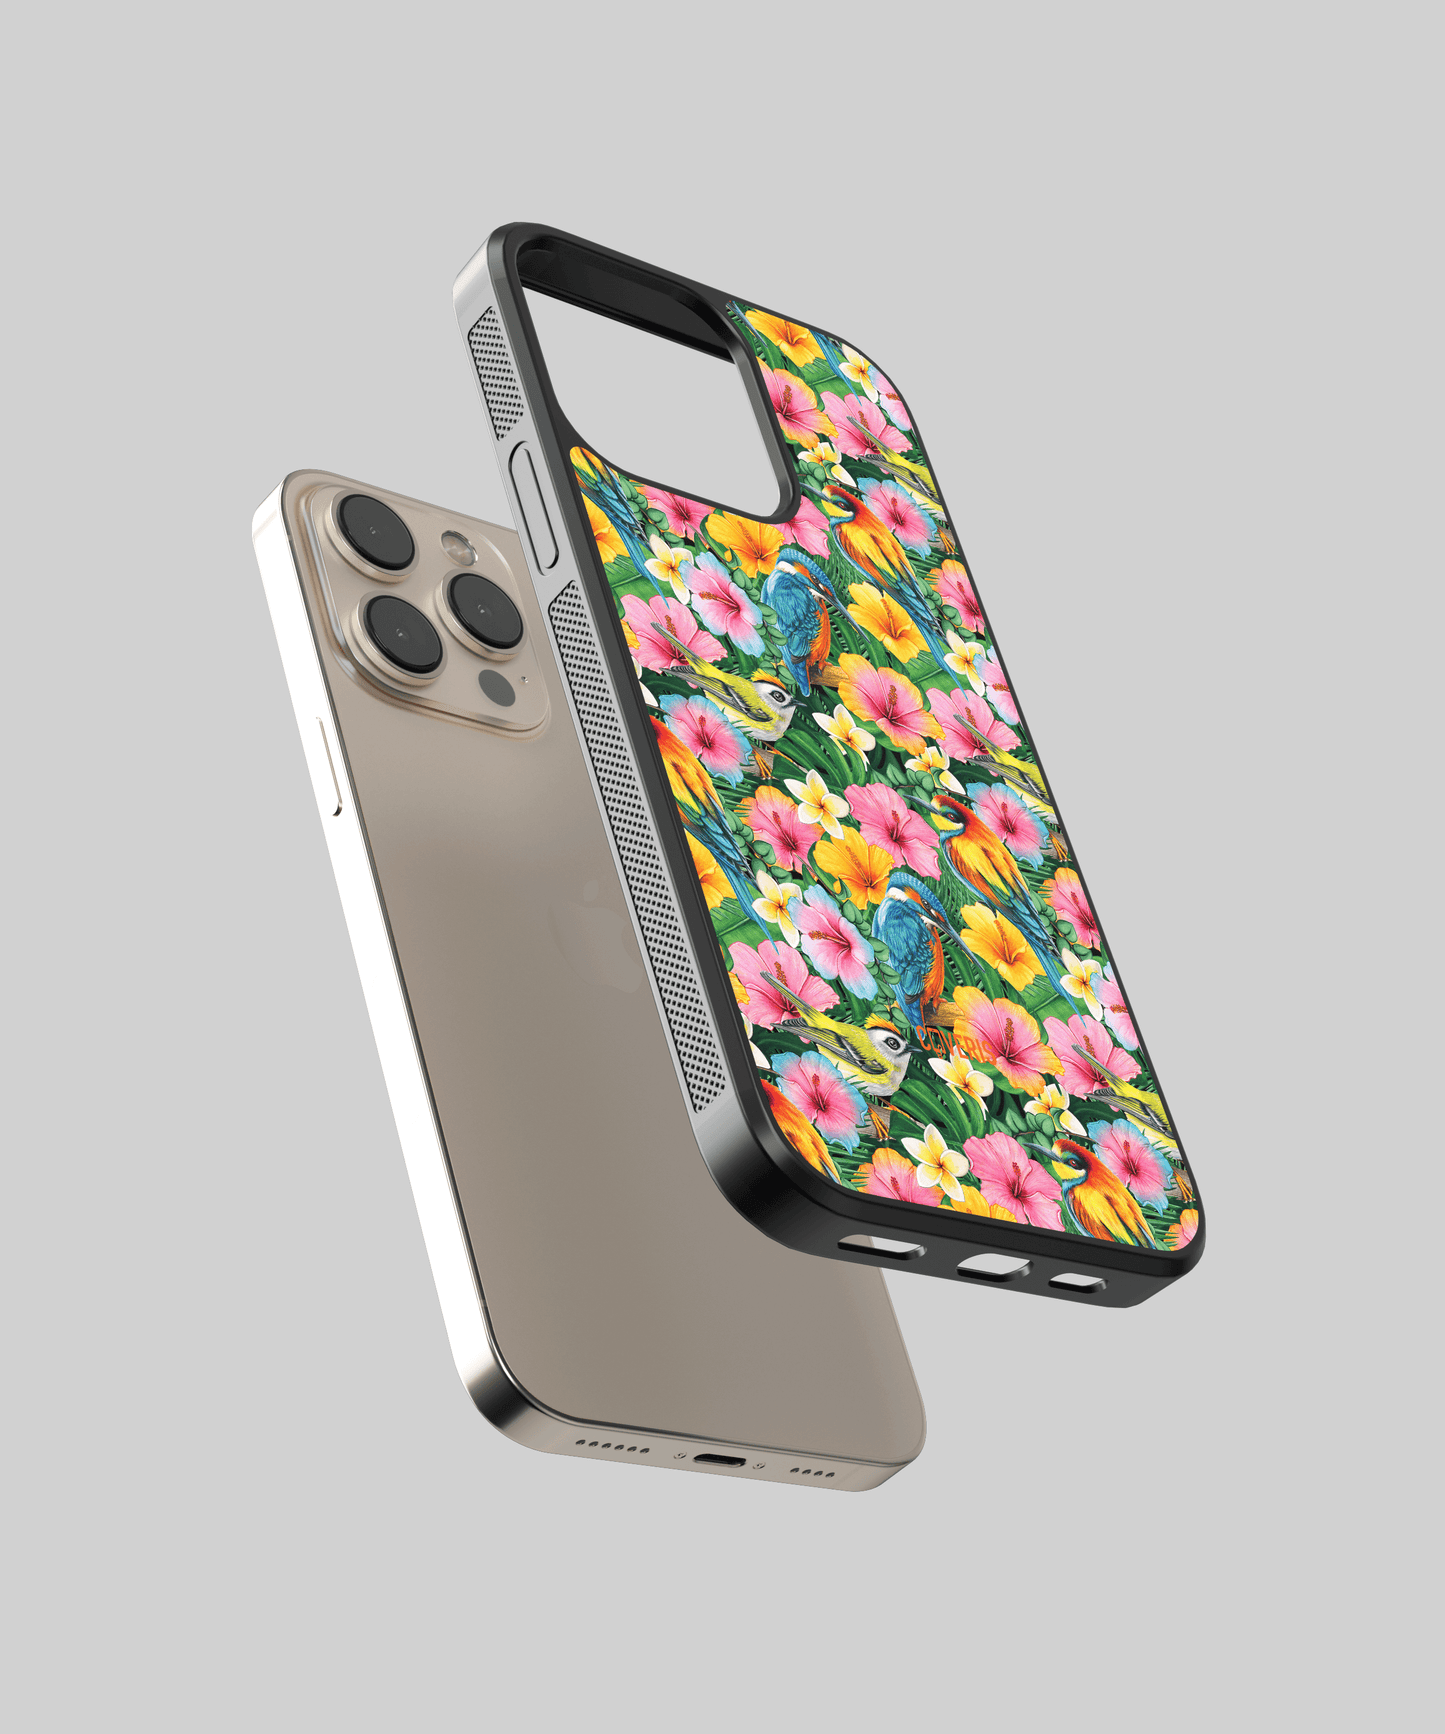 Islander - iPhone 6 / 6s phone case